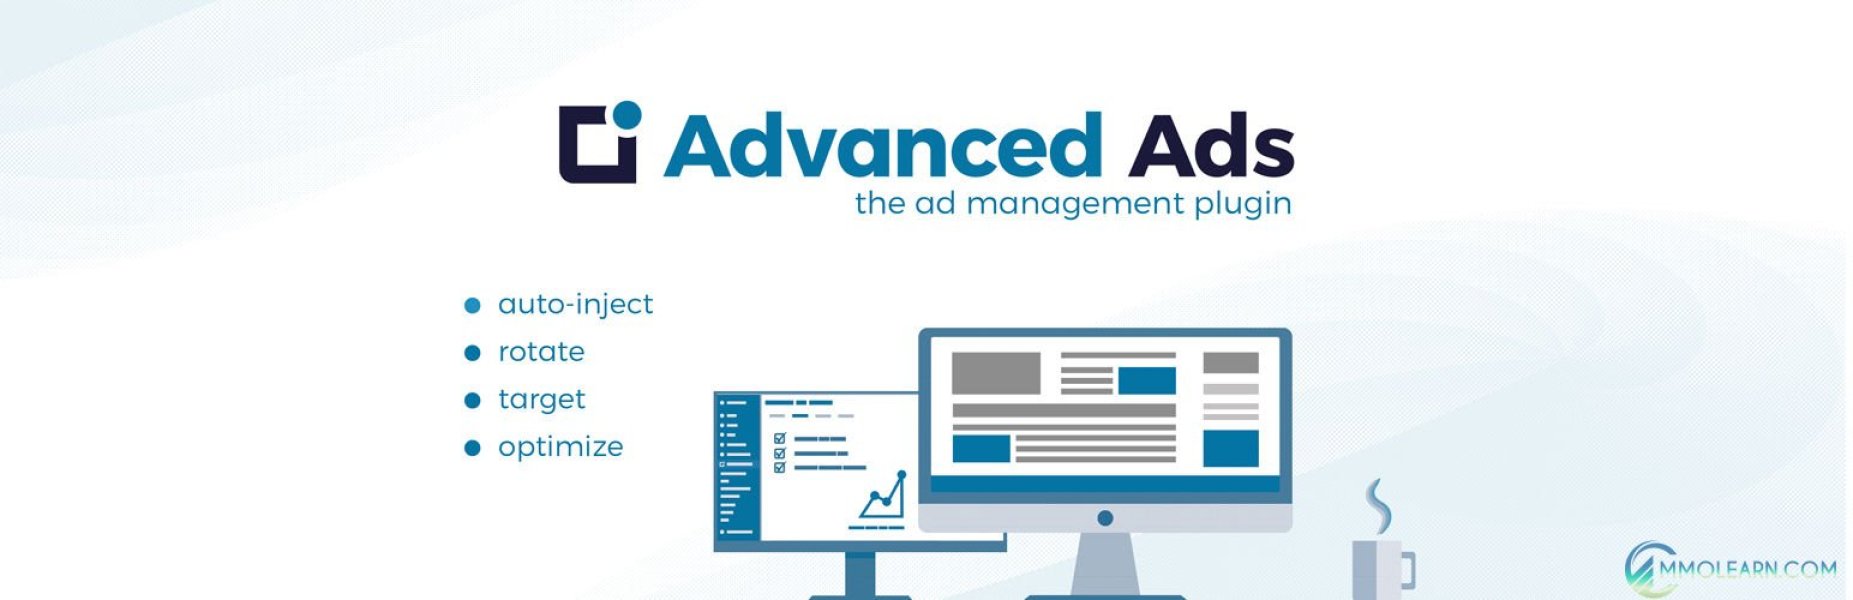 Advanced Ads Sticky Ads